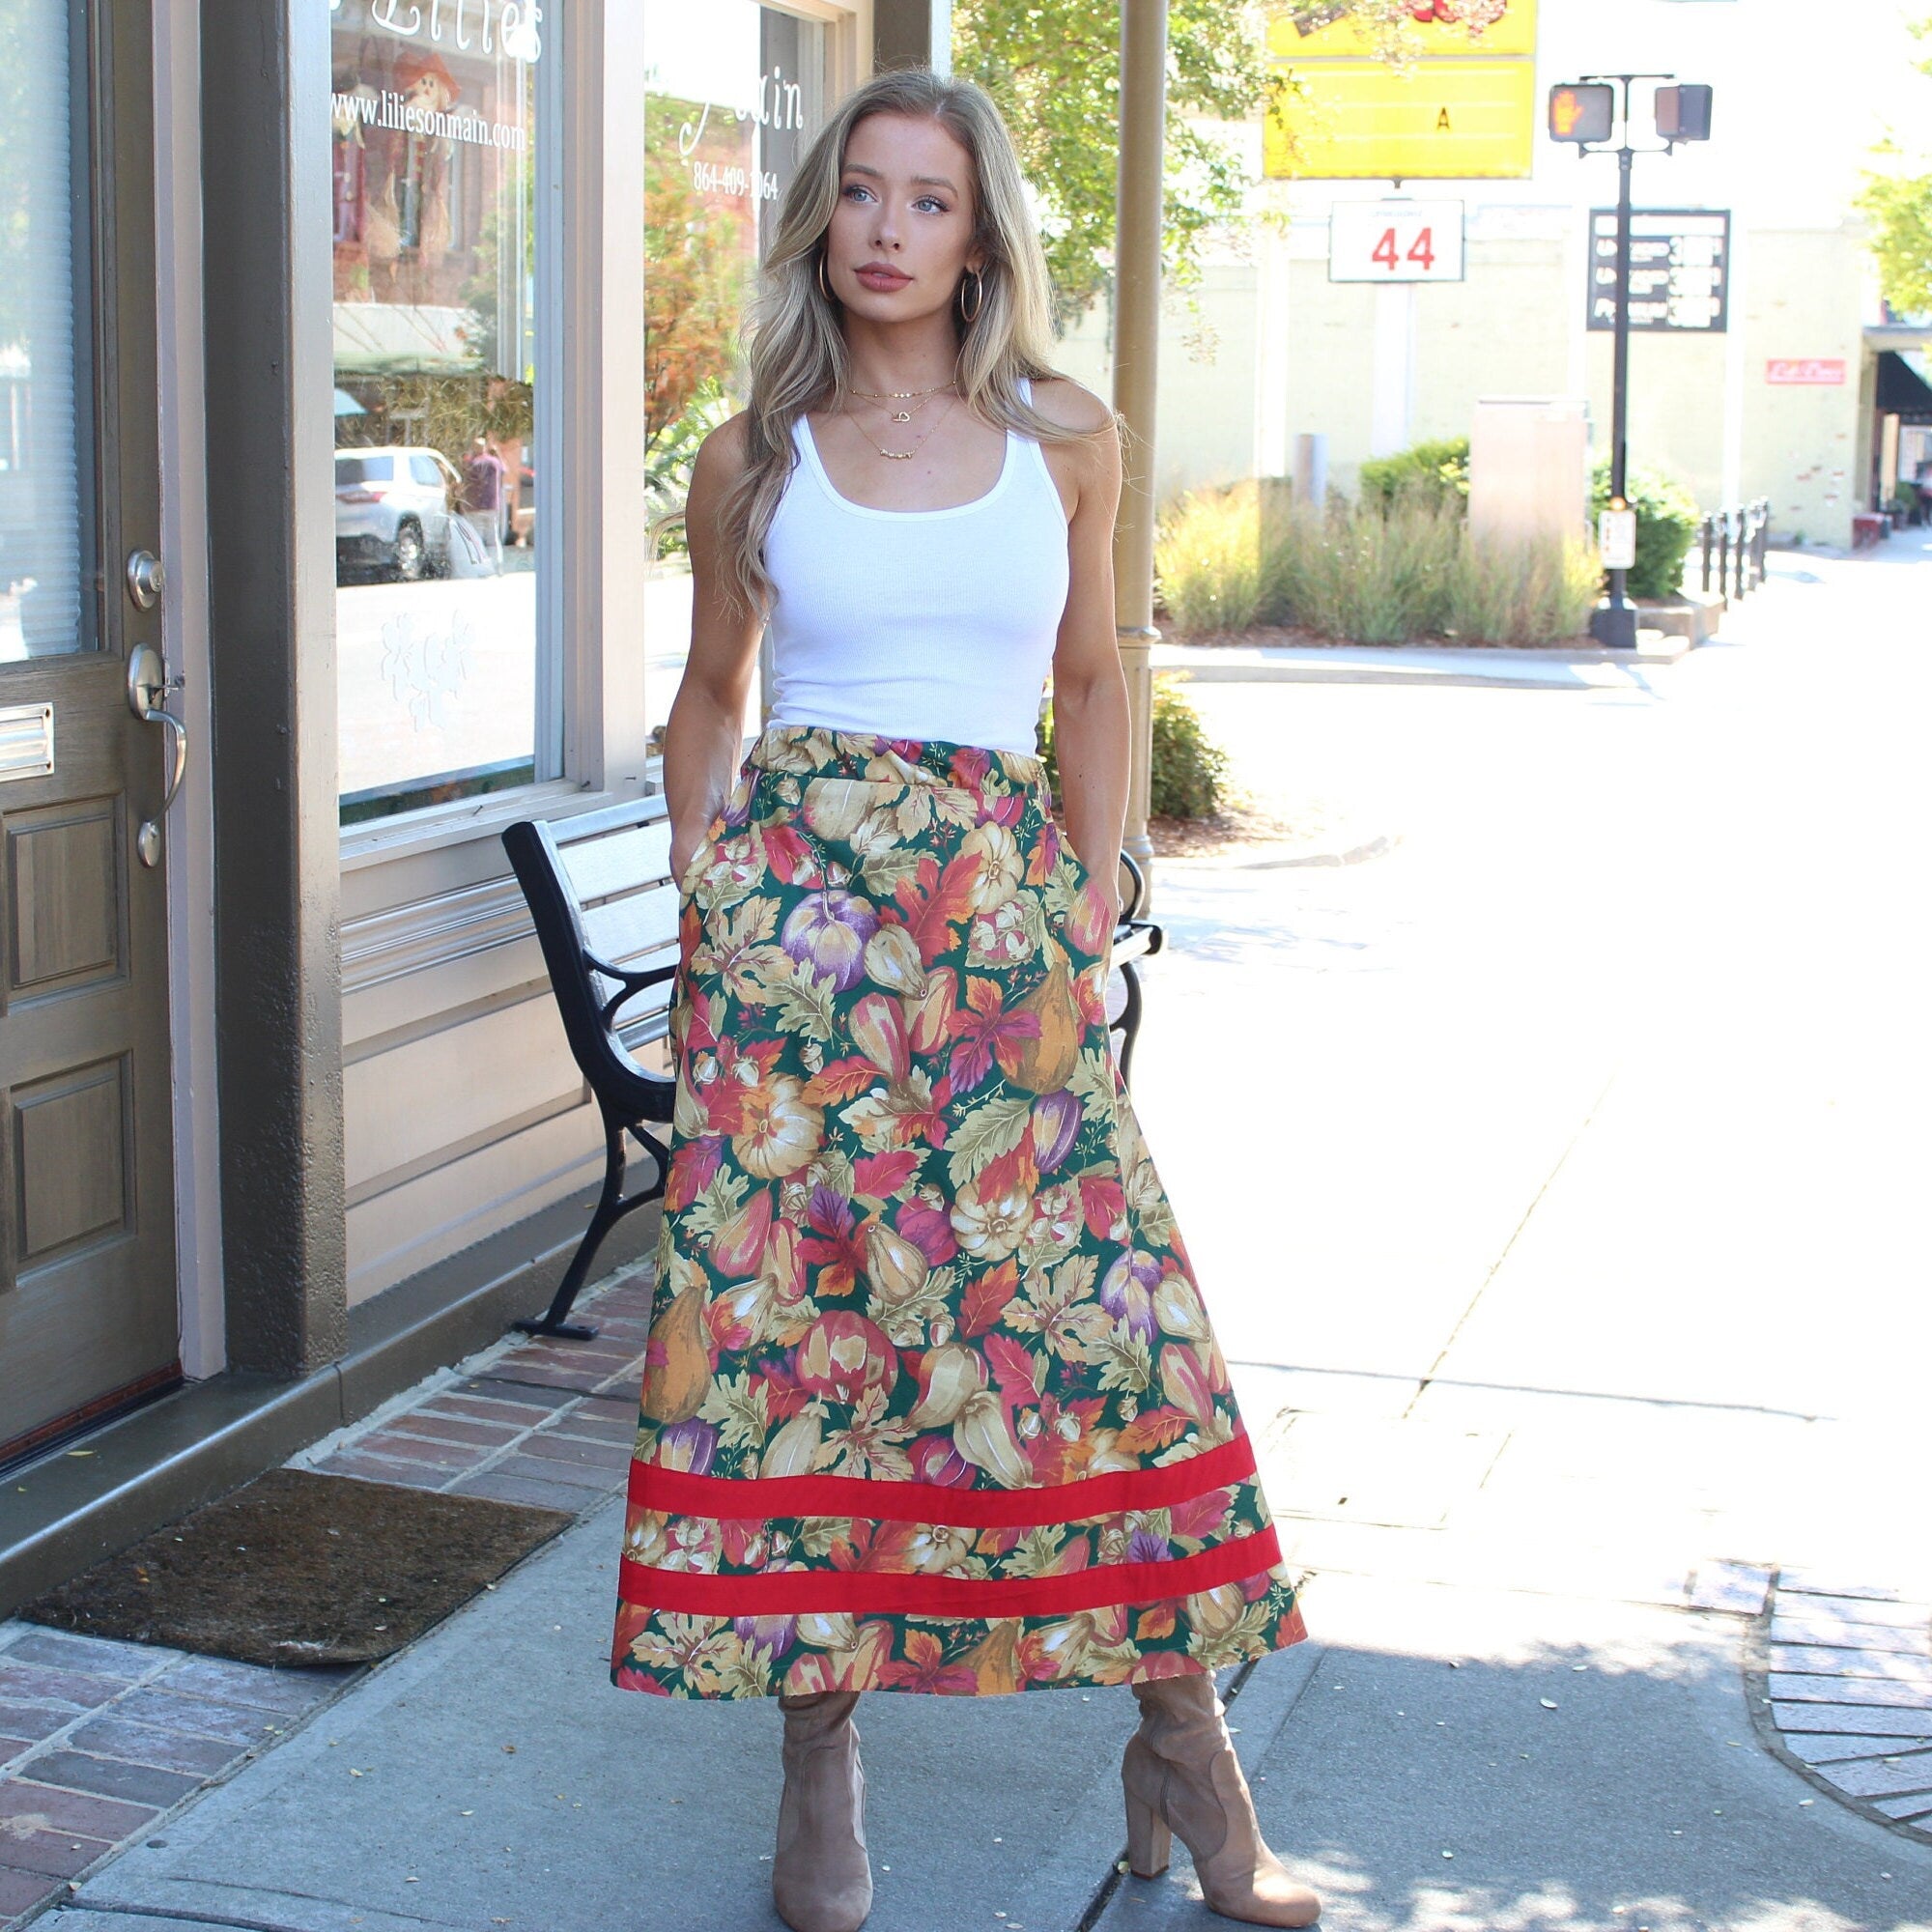 Handmade Floral Maxi Skirt -  Autumn Dream Made to Order Handmade Floral Skirt -  Fall Skirt with Pocket